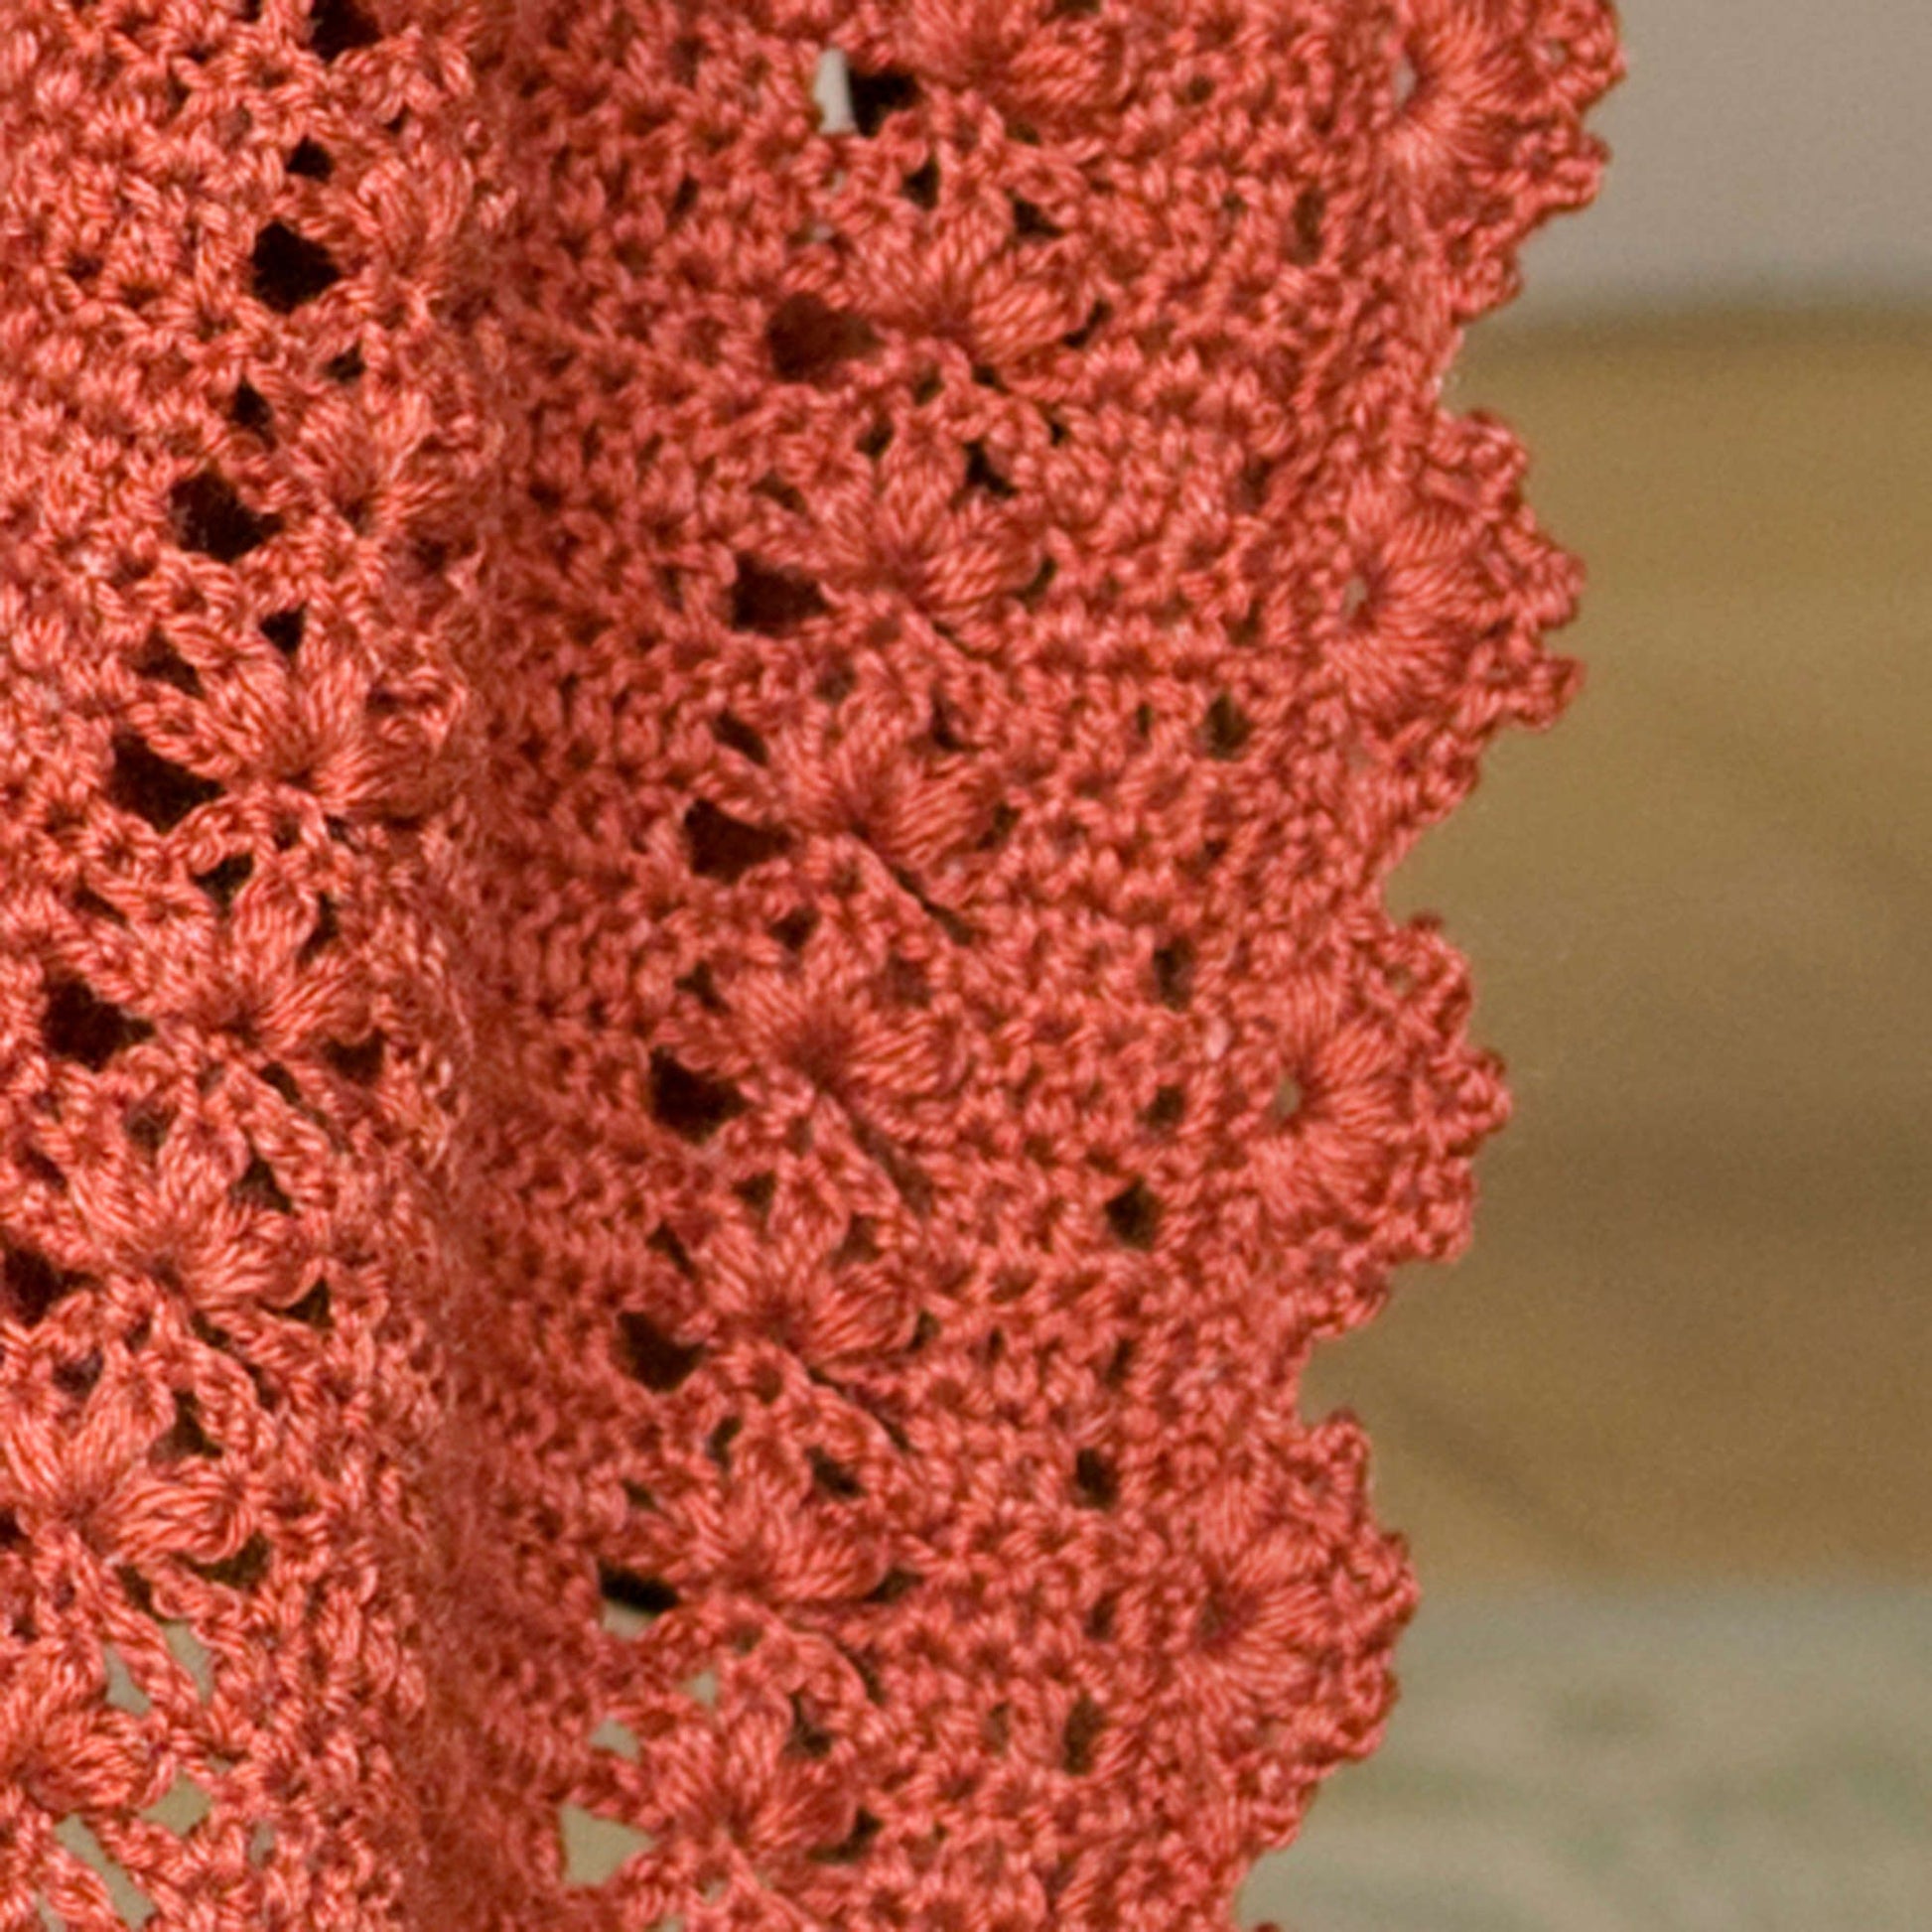 Free Red Heart Crochet Trefoil Throw Pattern